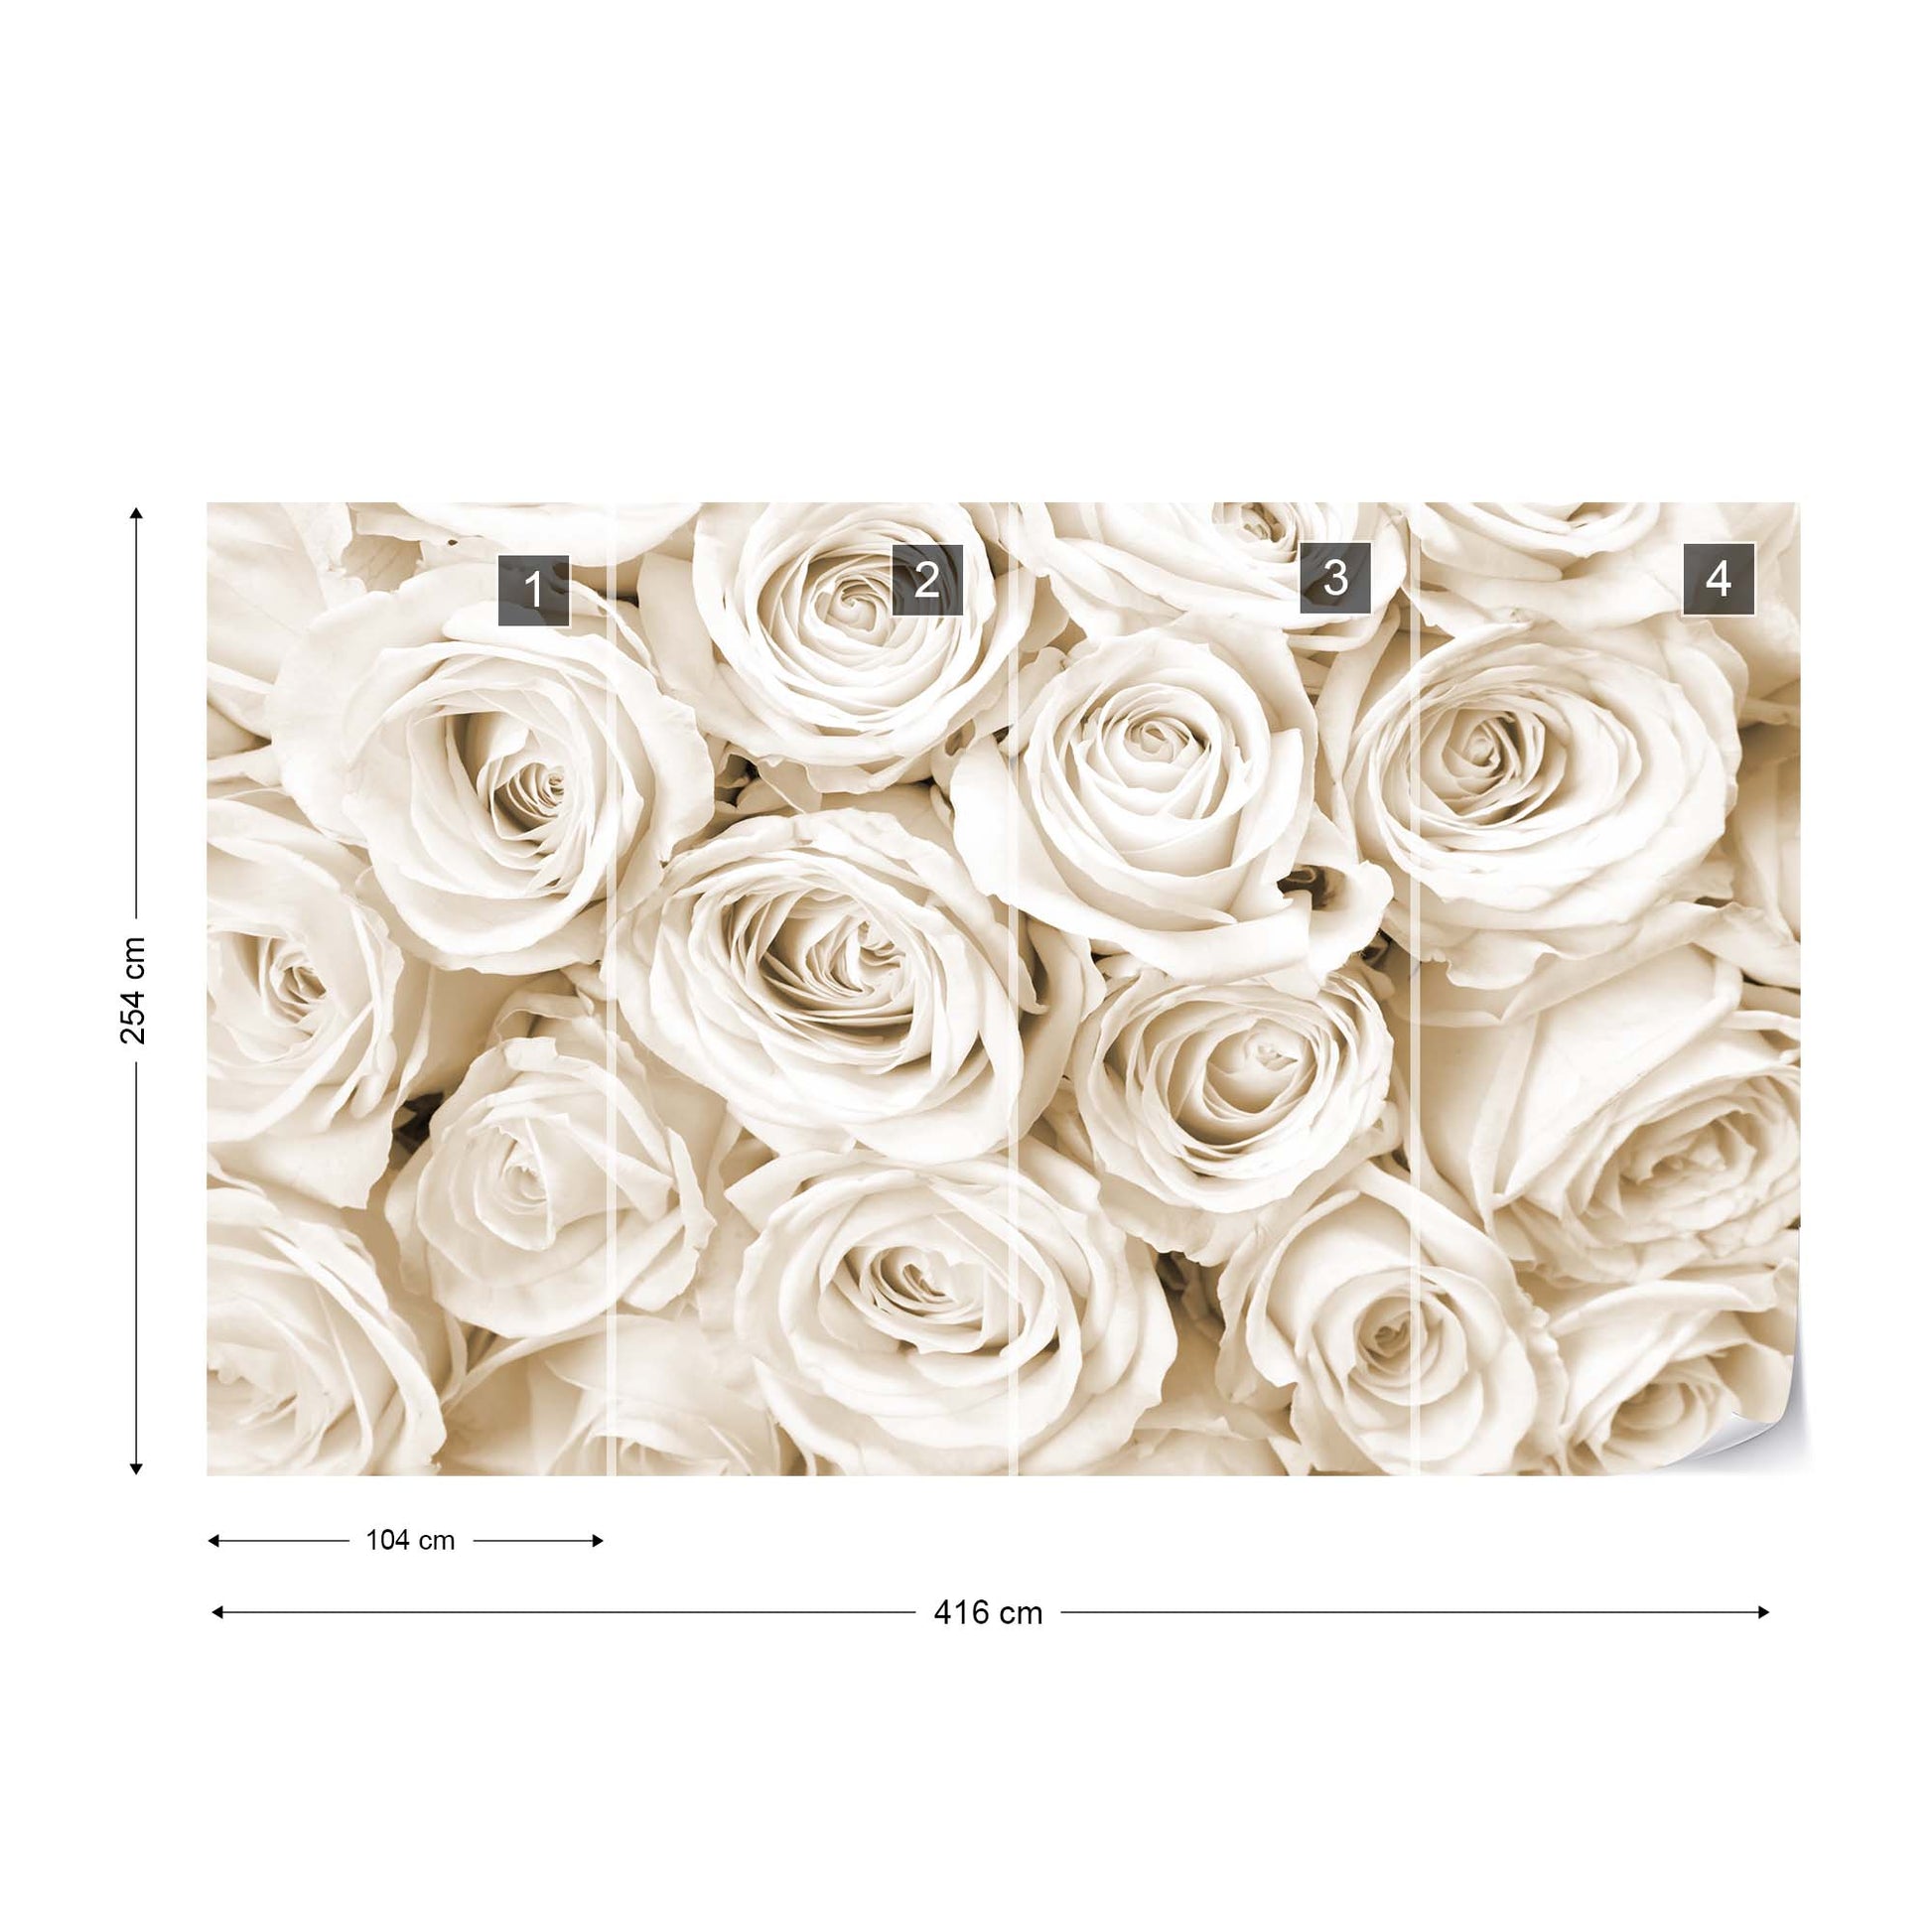 Rose Bouquet Sepia Wallpaper Waterproof for Rooms Bathroom Kitchen - USTAD HOME